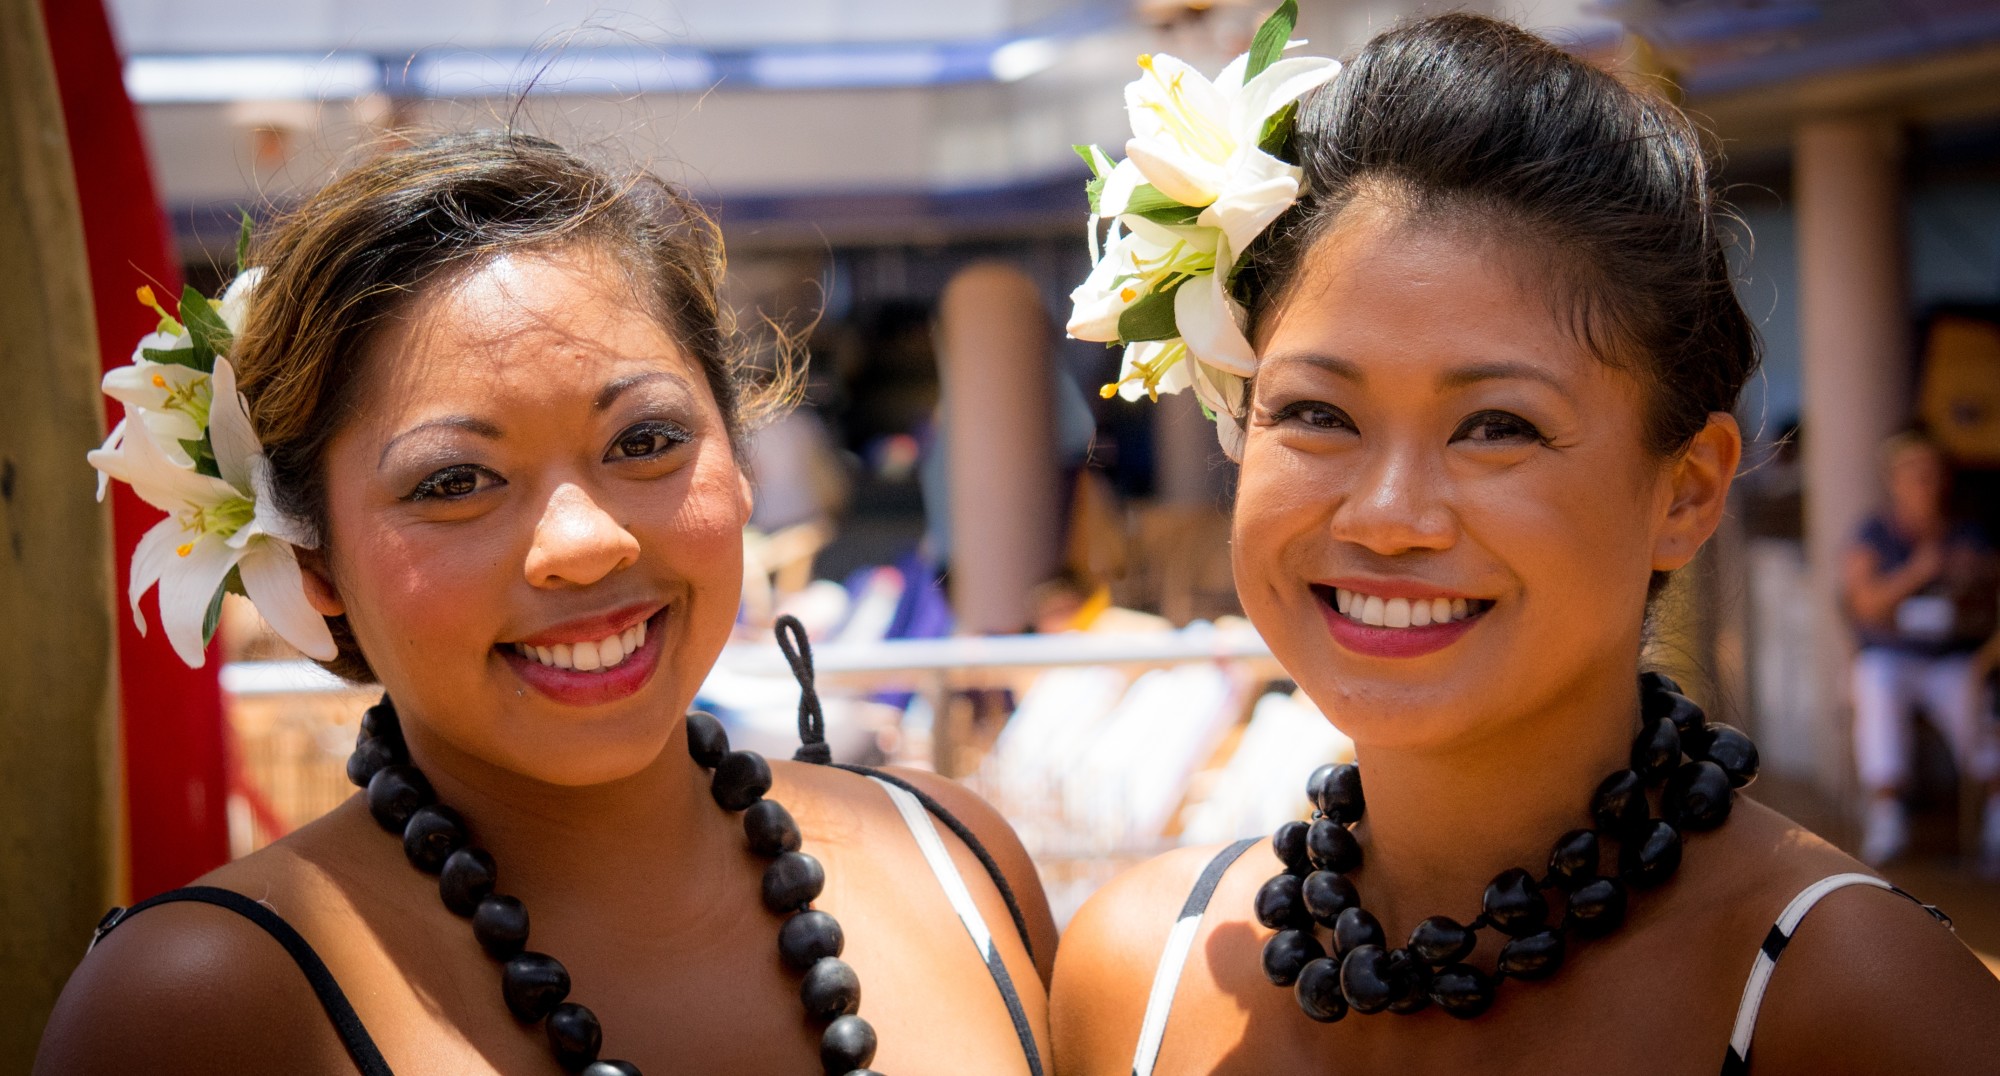 Wedding hairstyles for short hair Maui Weddings and Hawaiian Hair flowers |  Maui wedding hair, Short wedding hair, Wedding hair and makeup